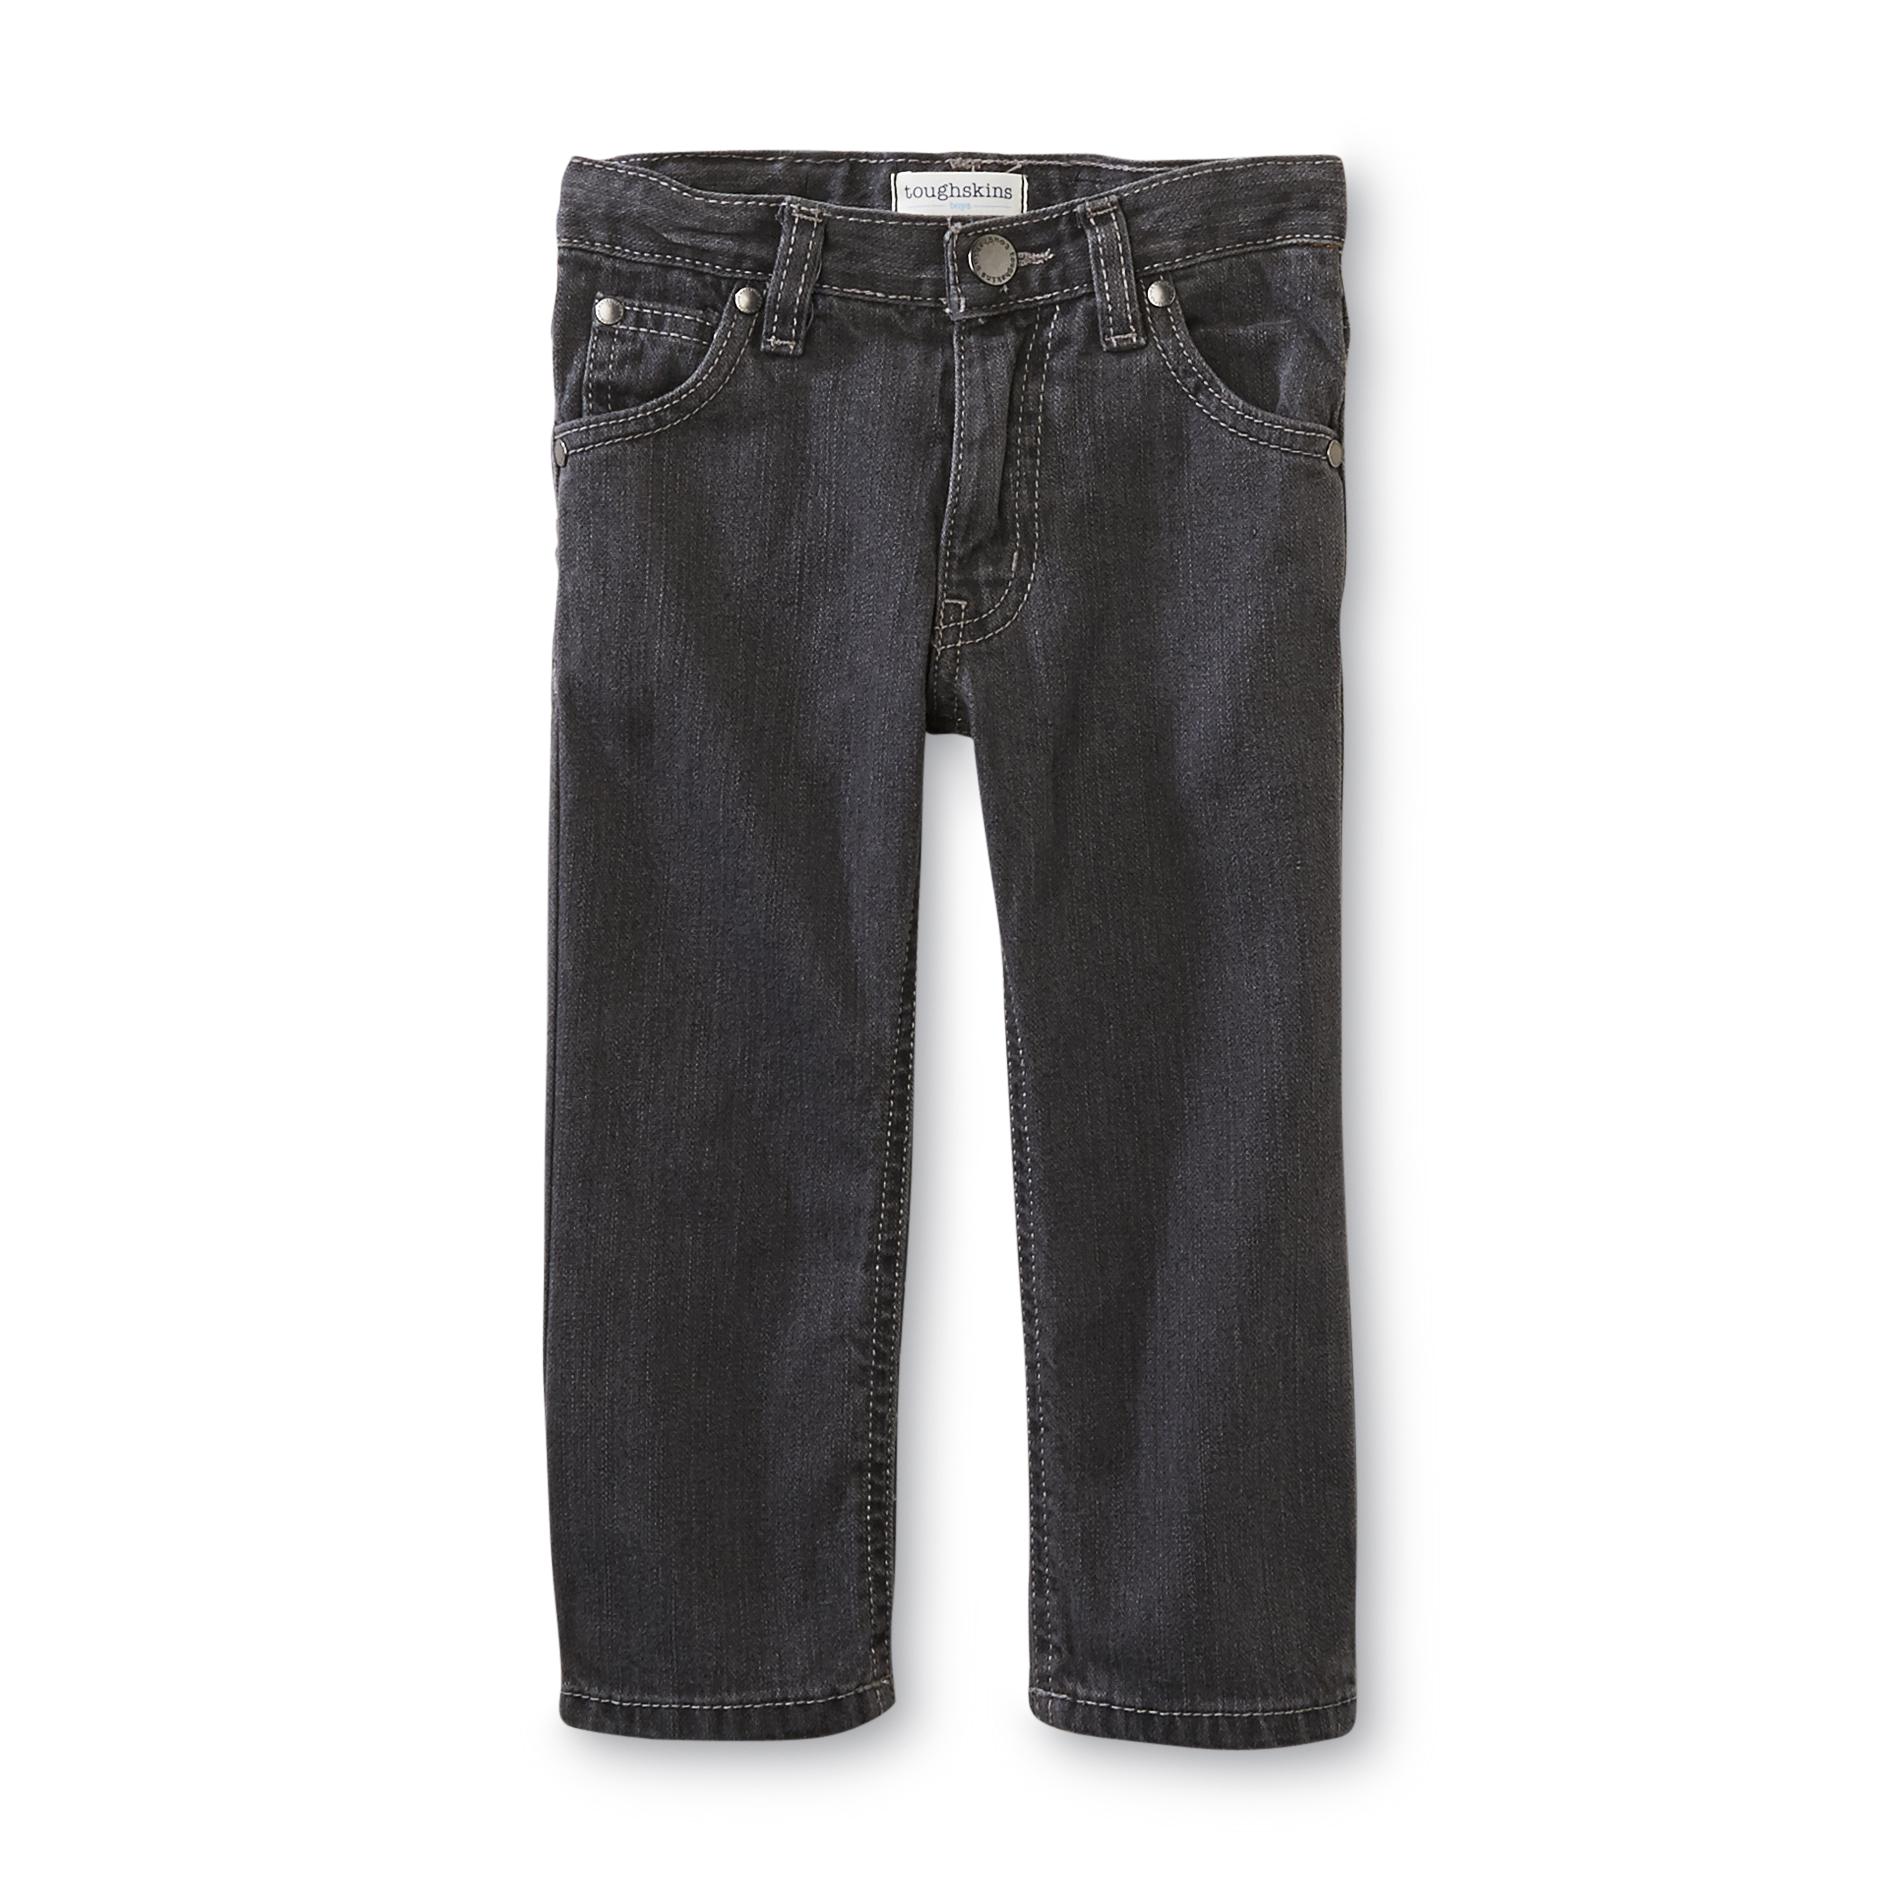 Toughskins Toddler Boy's Slim Straight Jeans